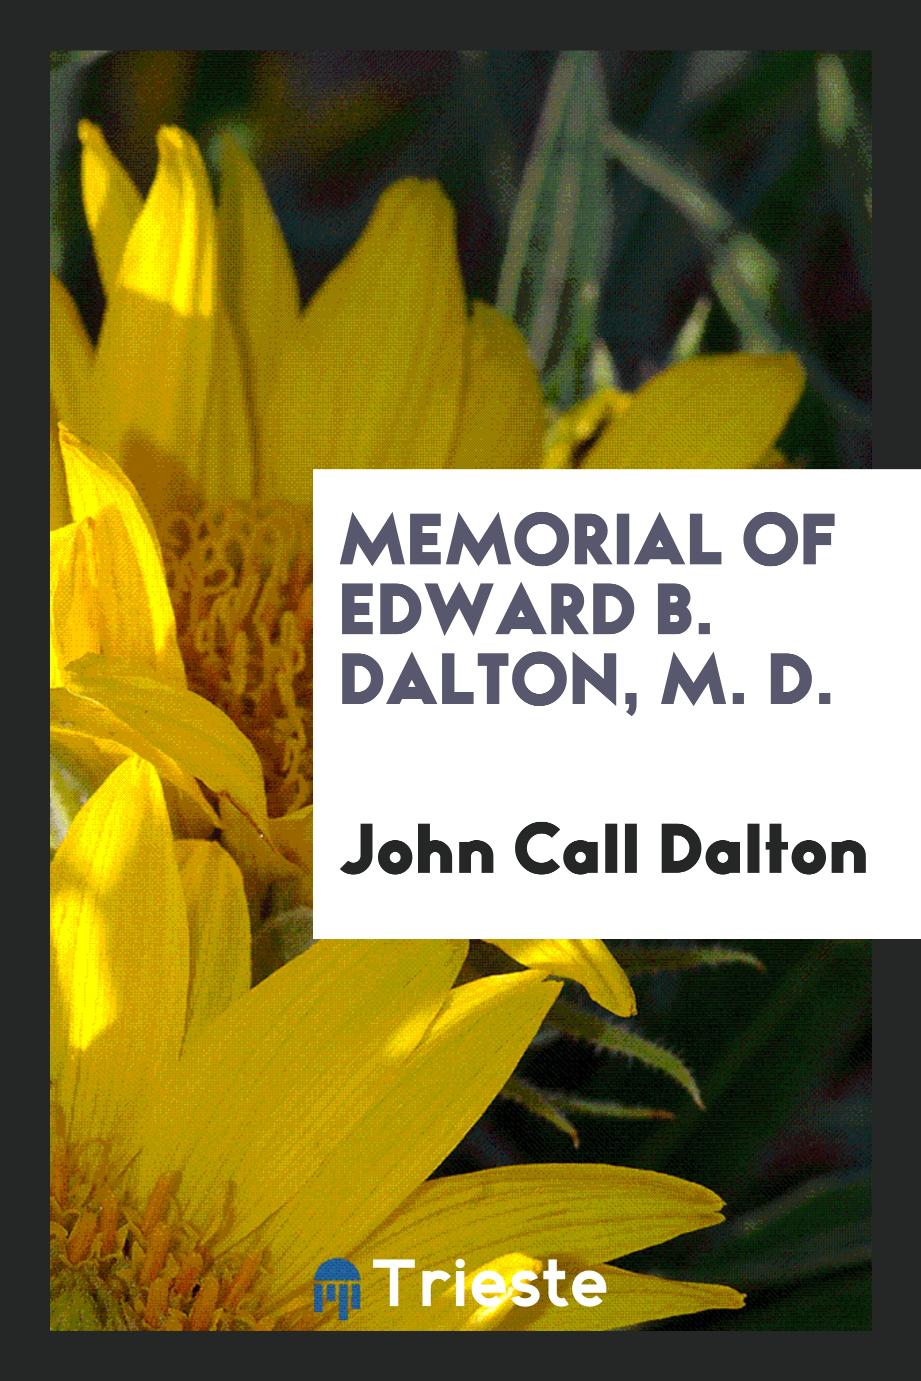 Memorial of Edward B. Dalton, M. D.